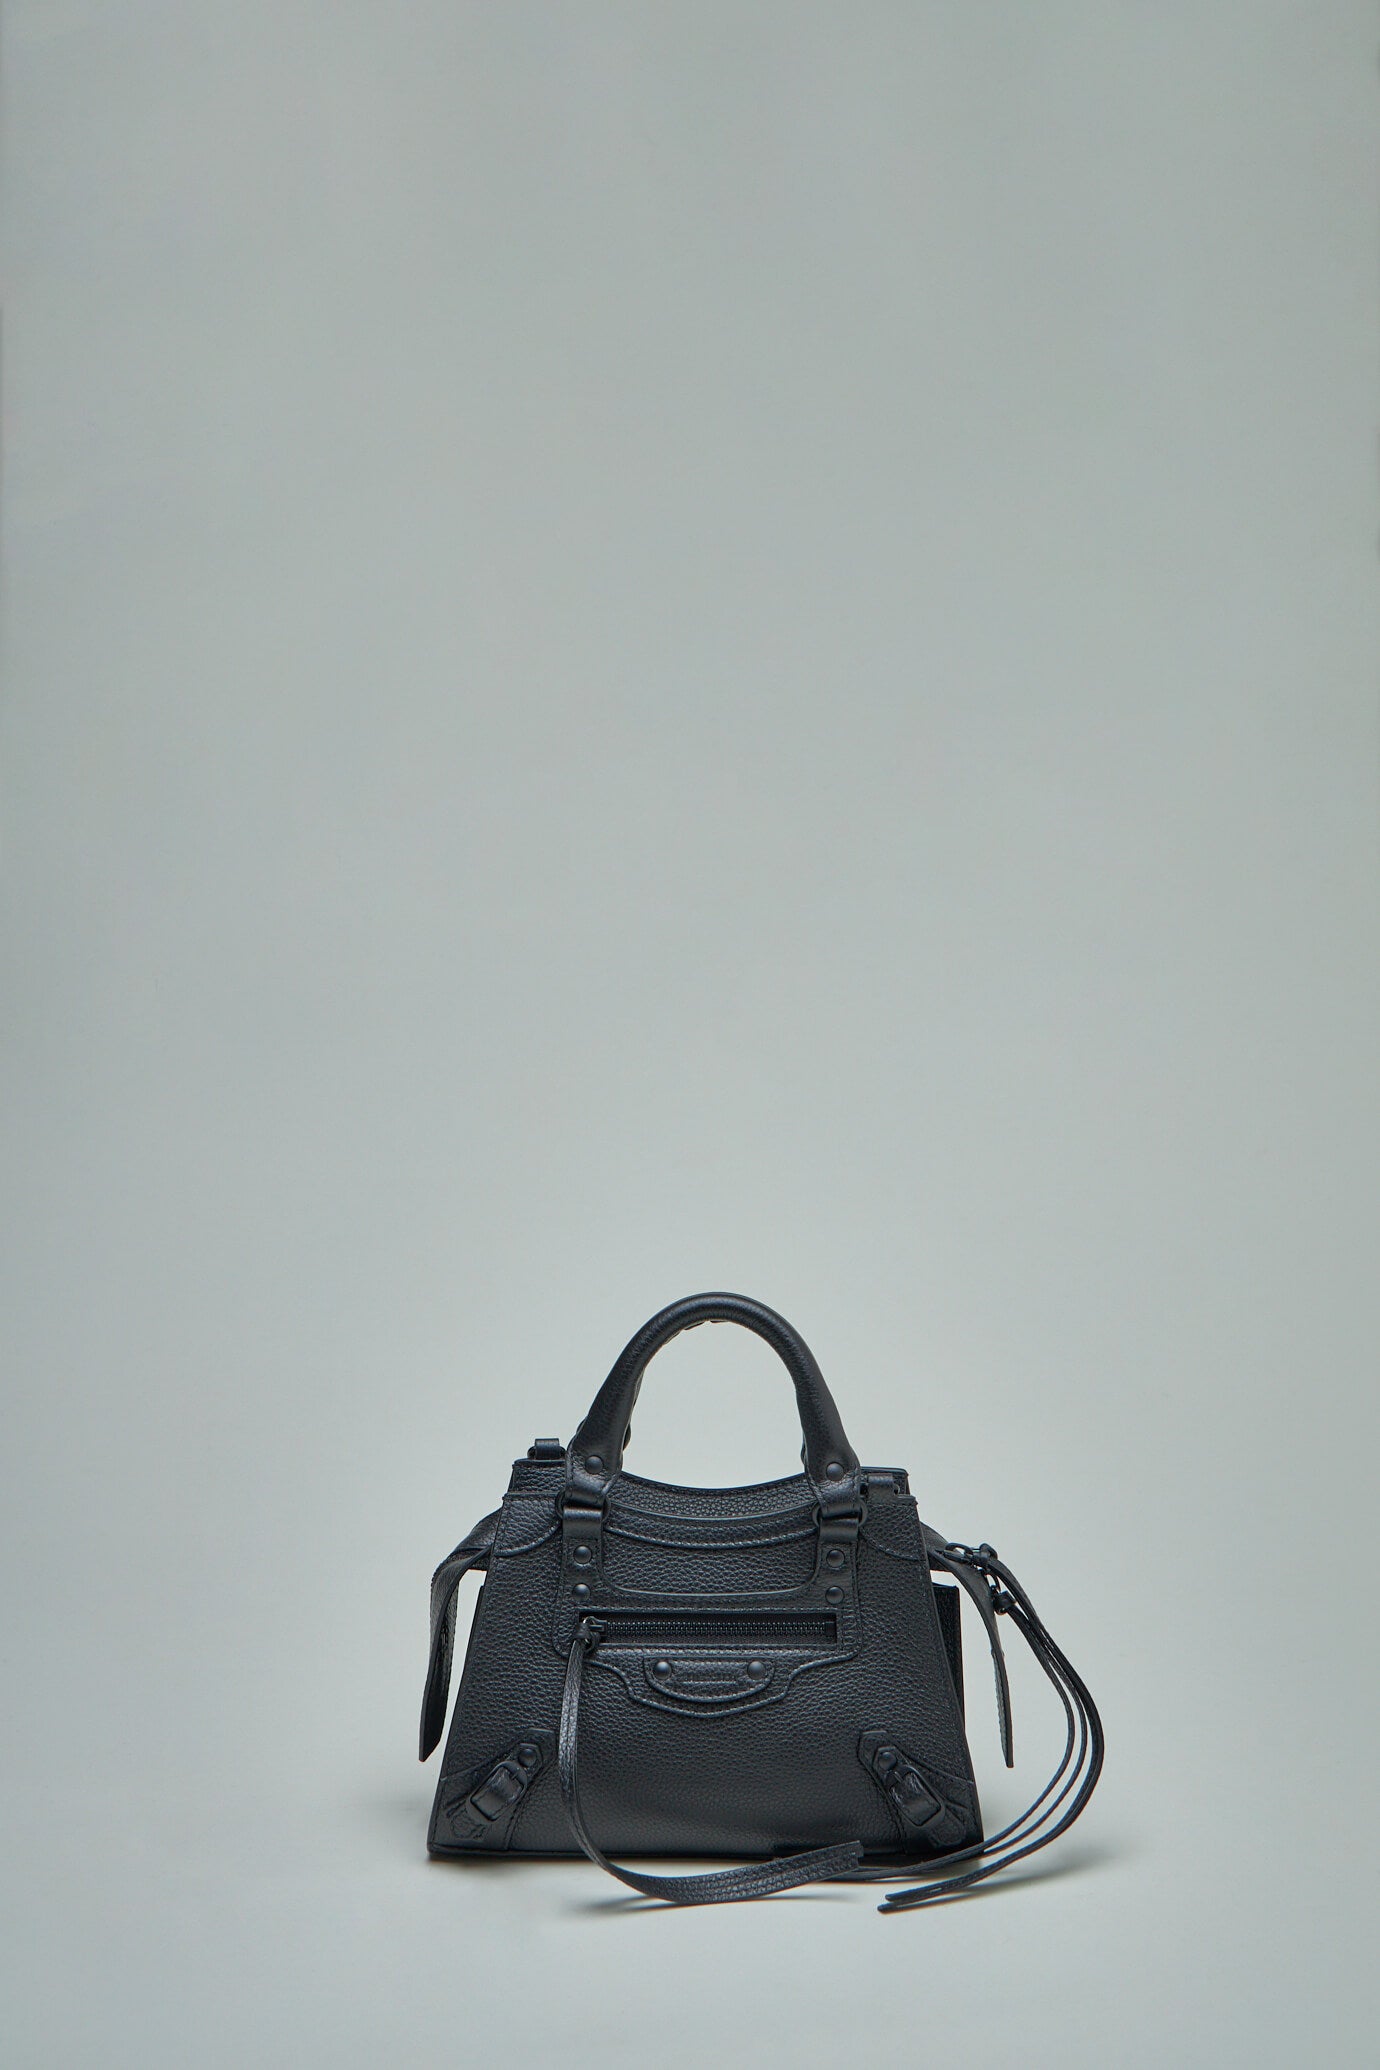 Balenciaga Black Neo Classic Nano City Bag